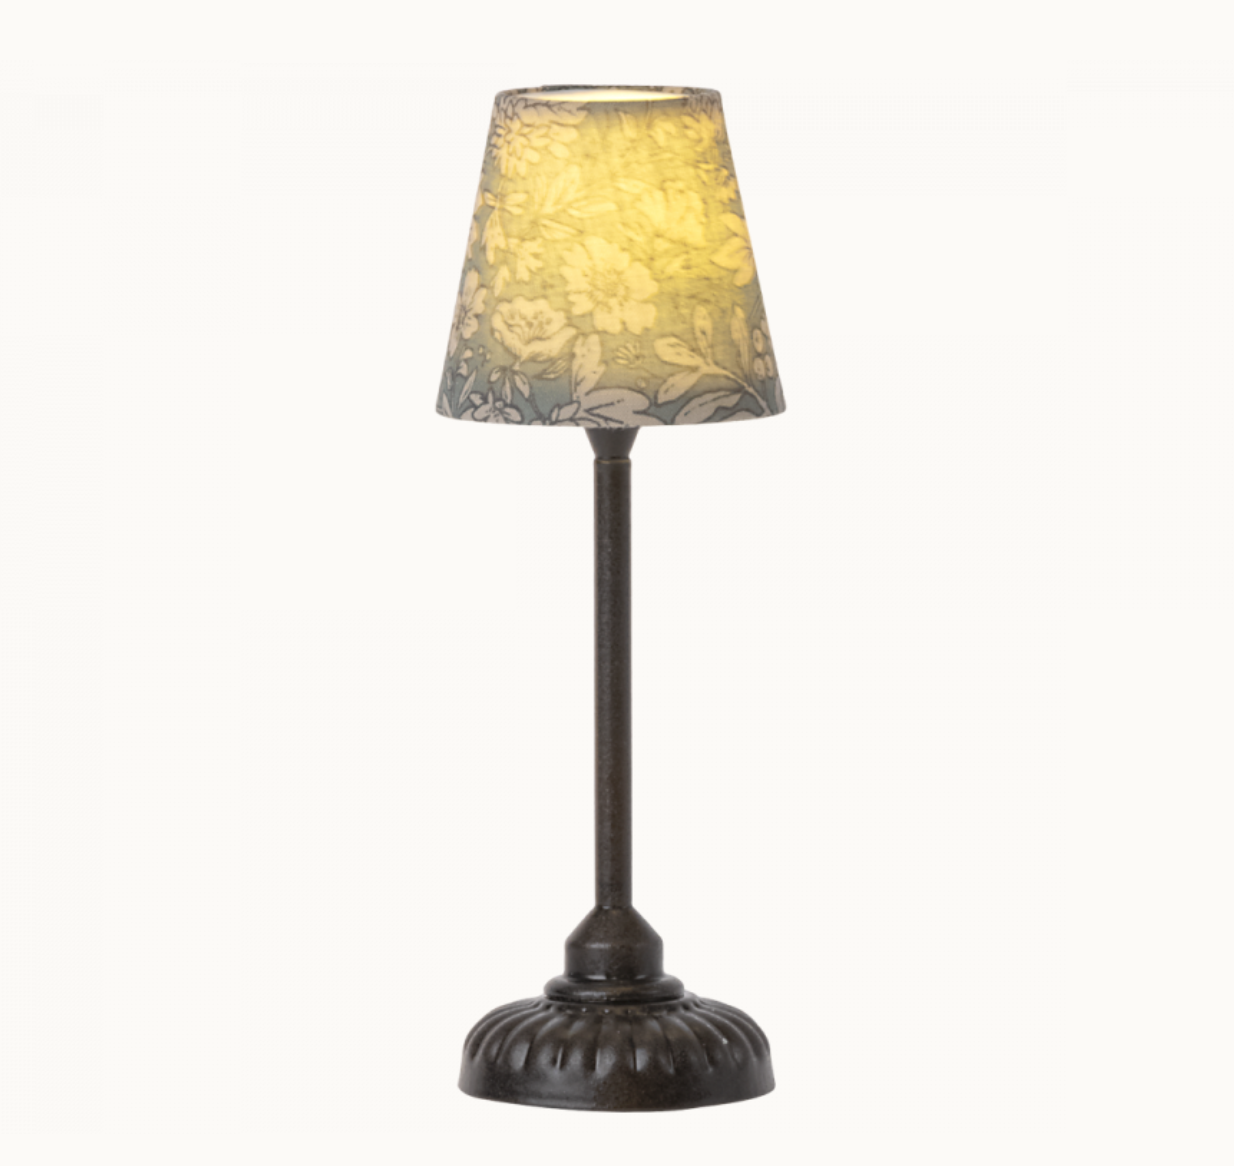 Maileg Vintage floor lamp, Small - Antracite